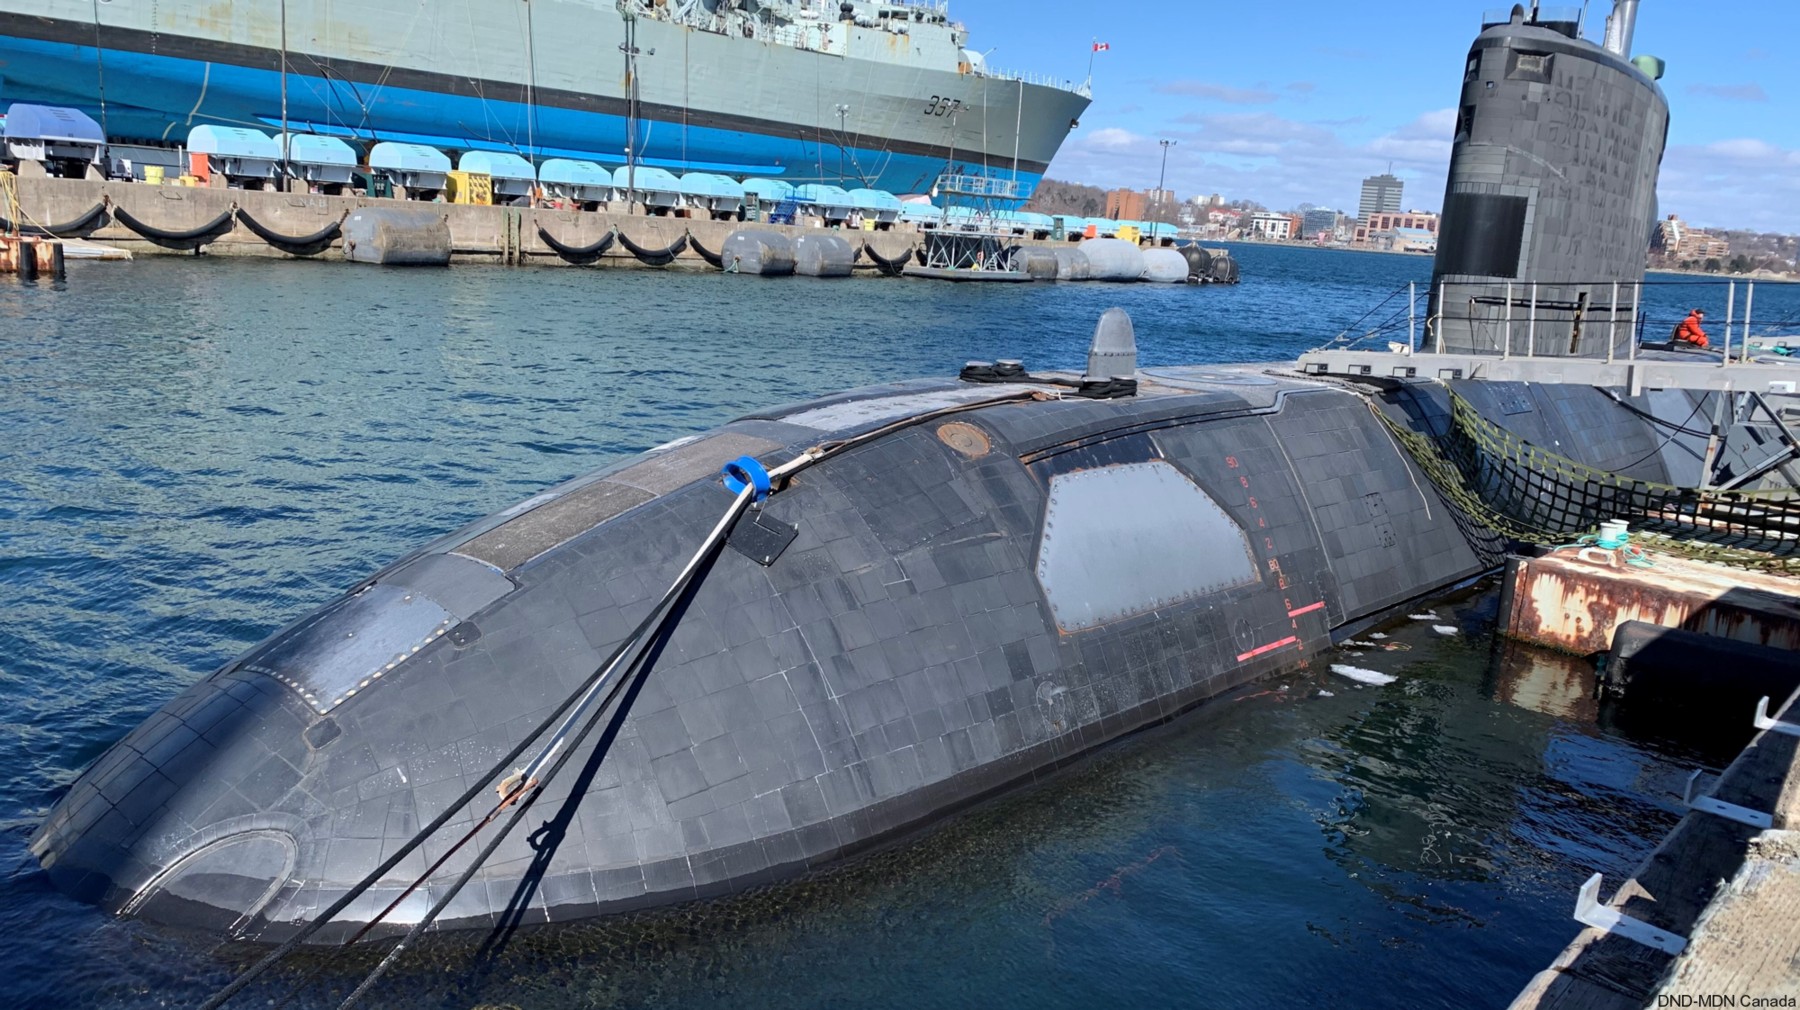 ssk-877 hmcs windsor victoria upholder class attack submarine hunter killer ncsm royal canadian navy 20 cfb halifax